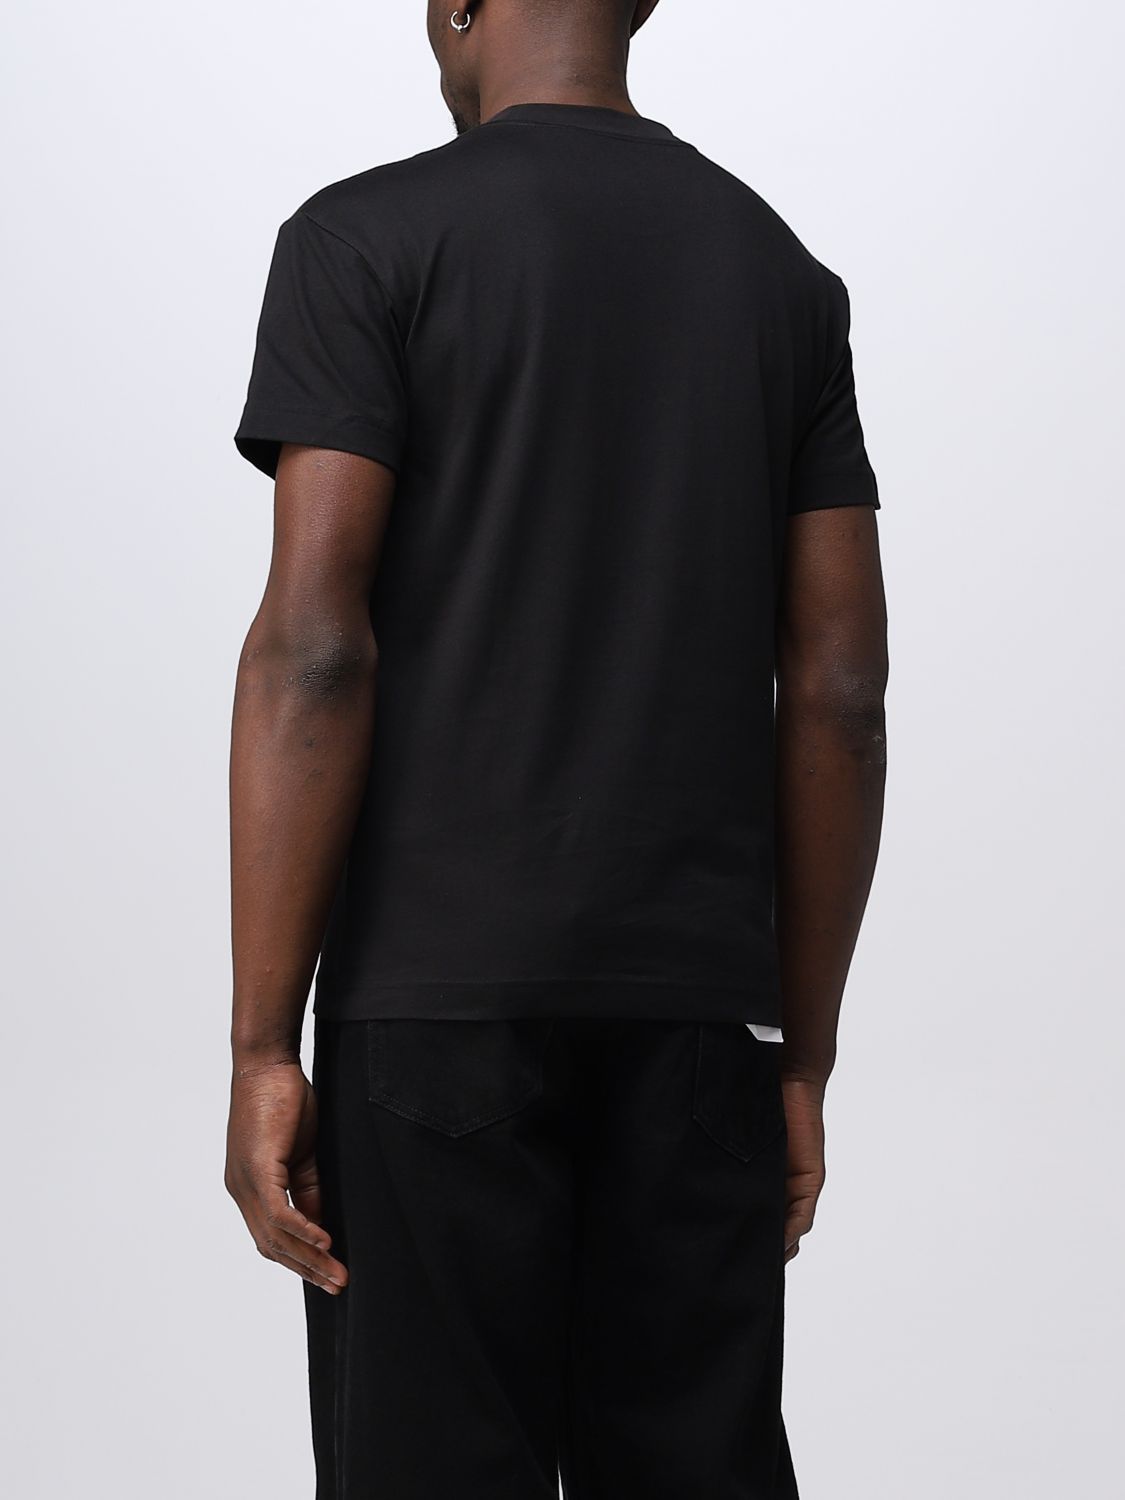 CALVIN KLEIN JEANS: t-shirt for men - Black | Calvin Klein Jeans t ...